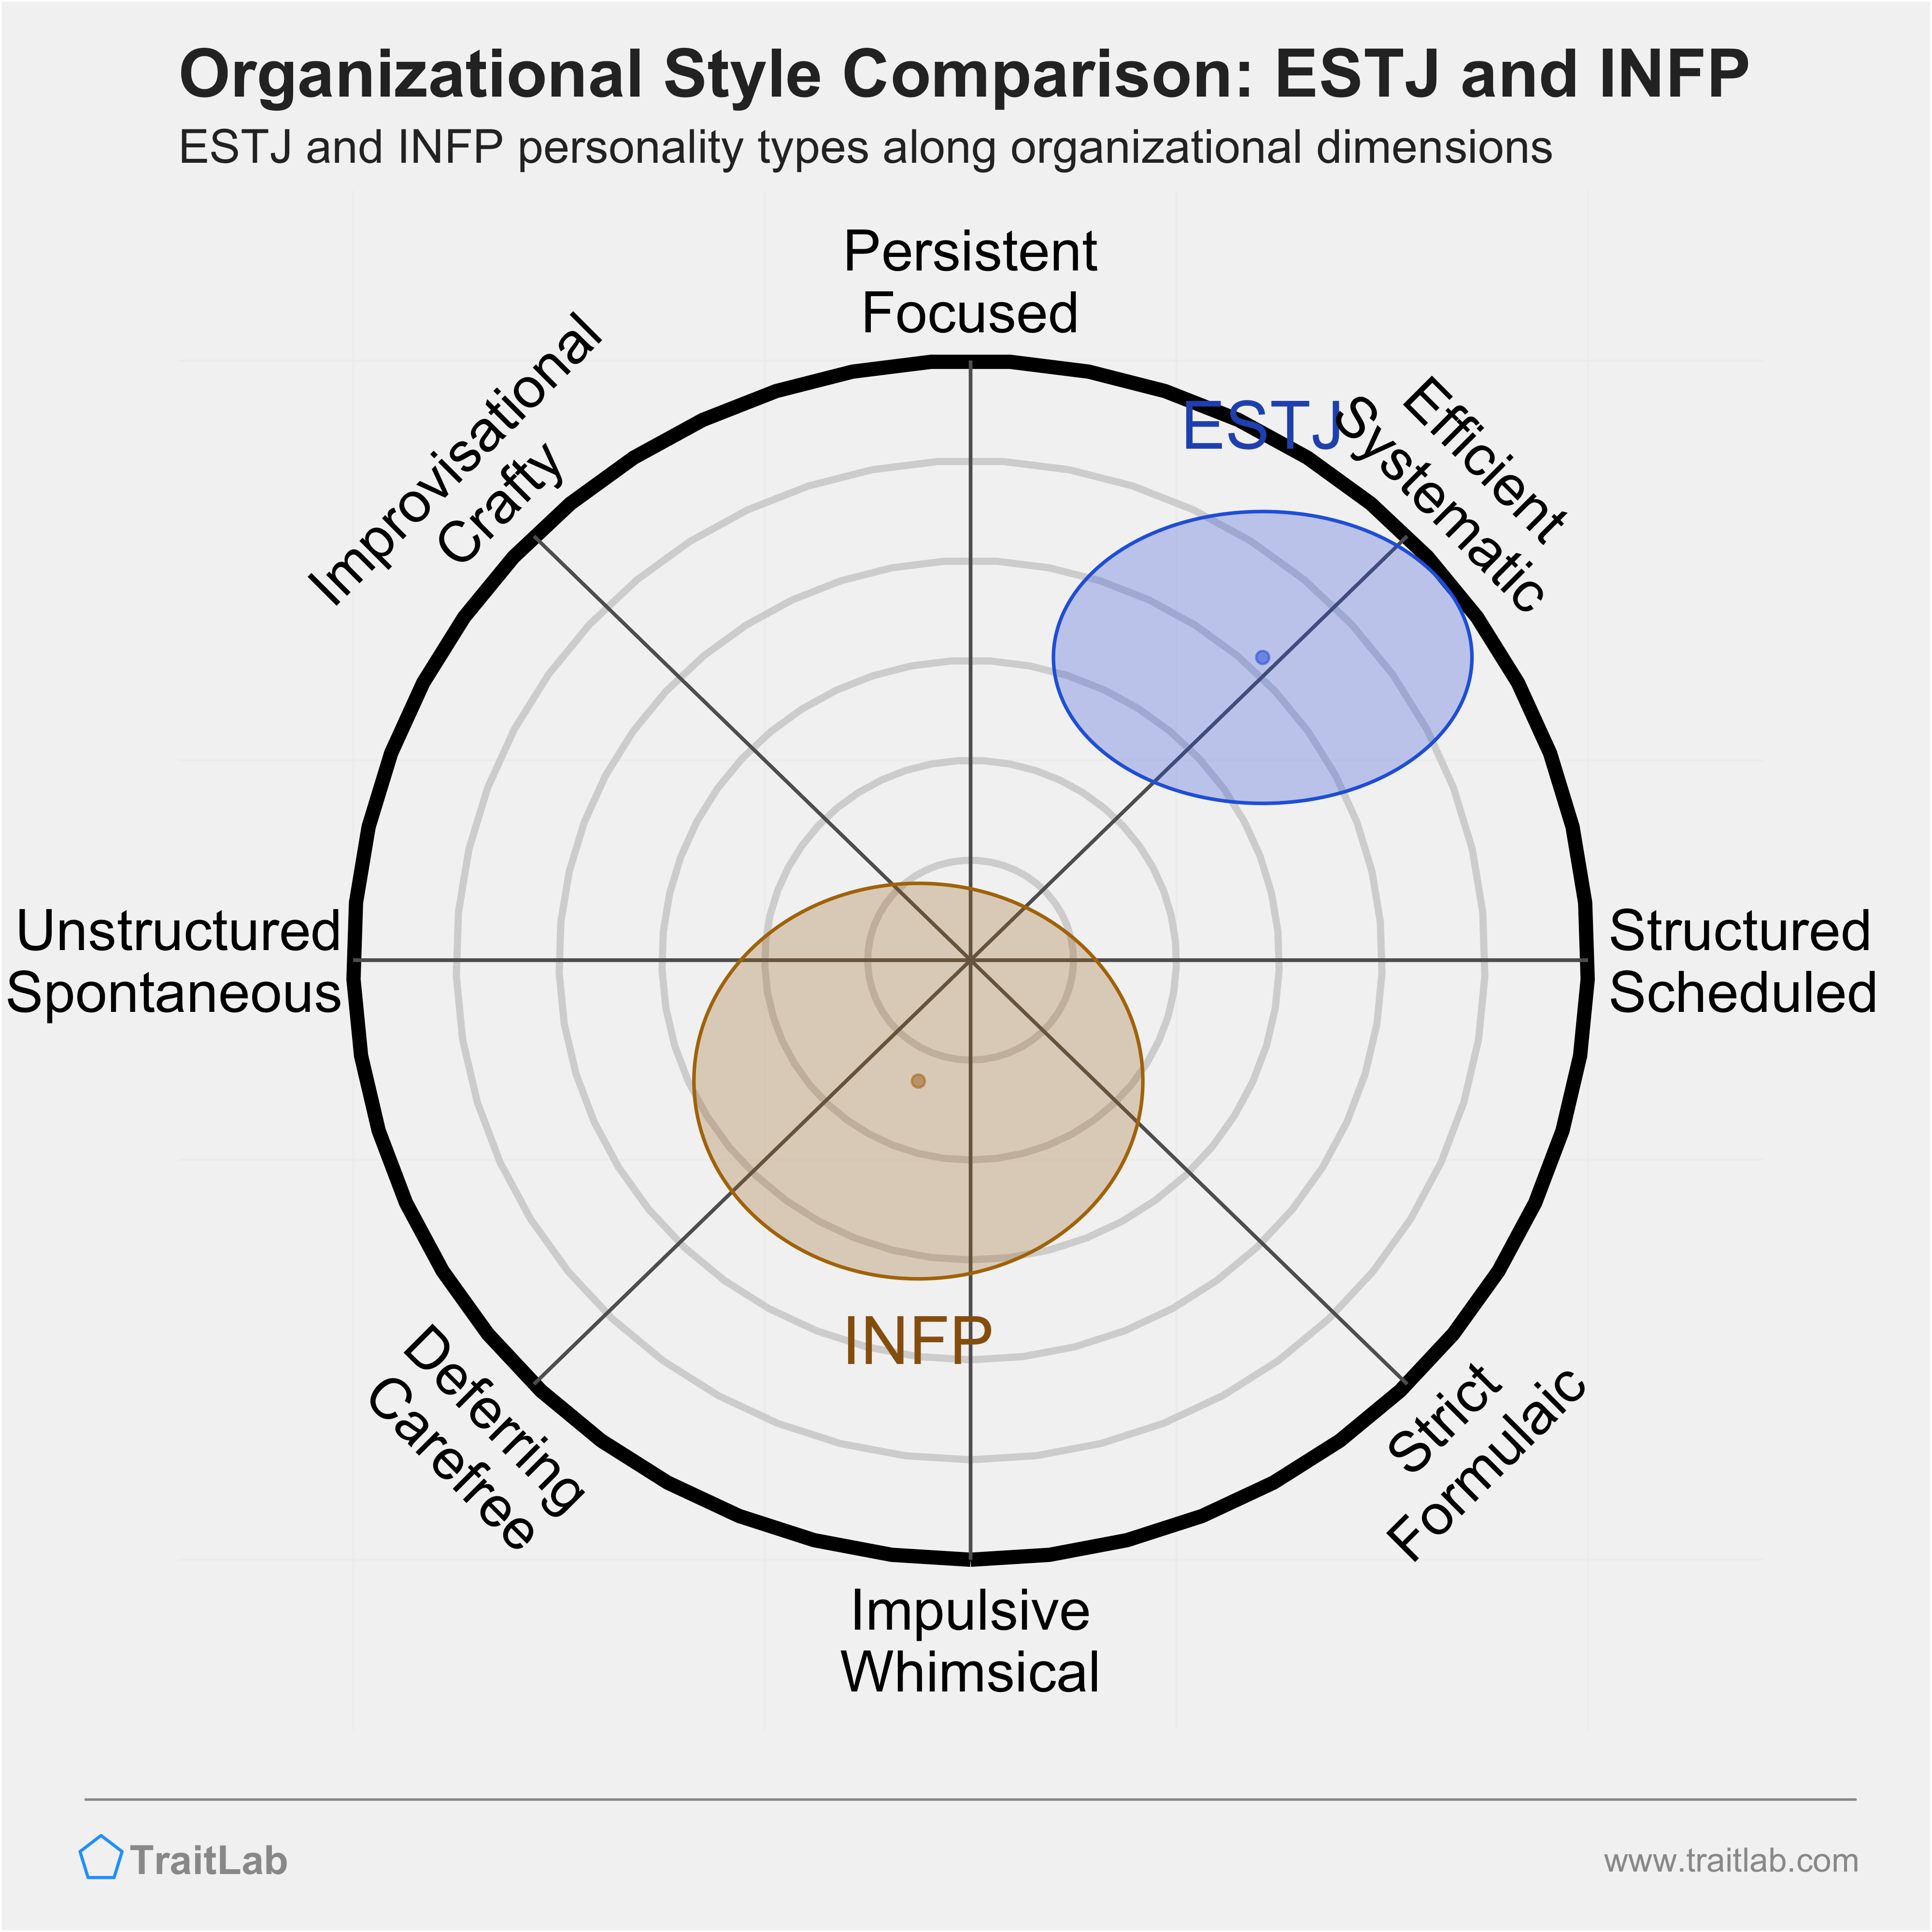 ESTJ and INFP comparison across organizational dimensions